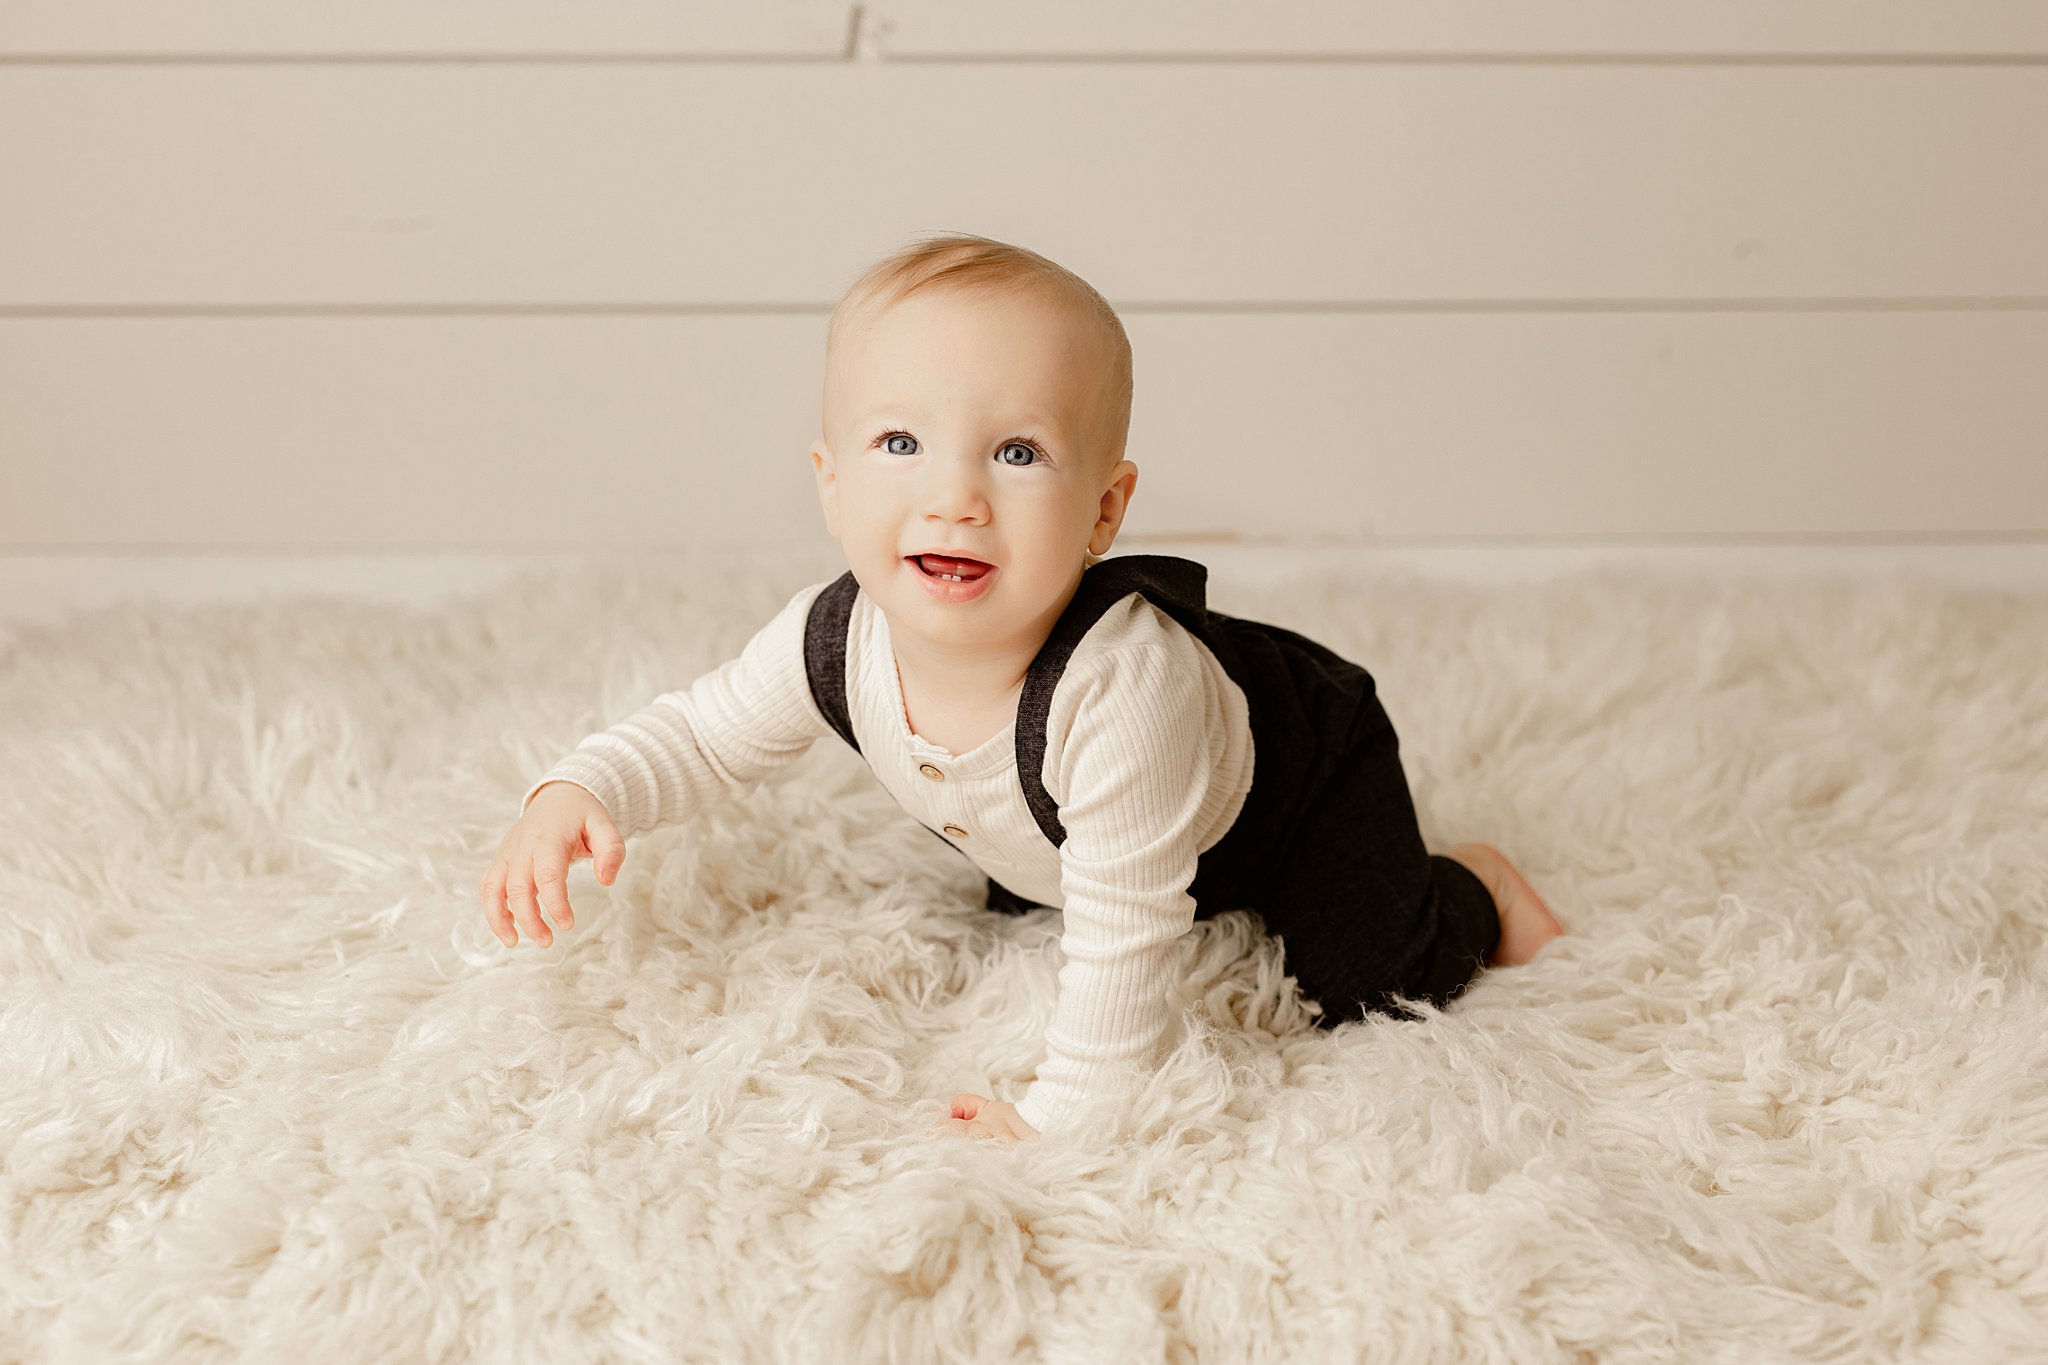 Young baby boy crawls on white shag rug